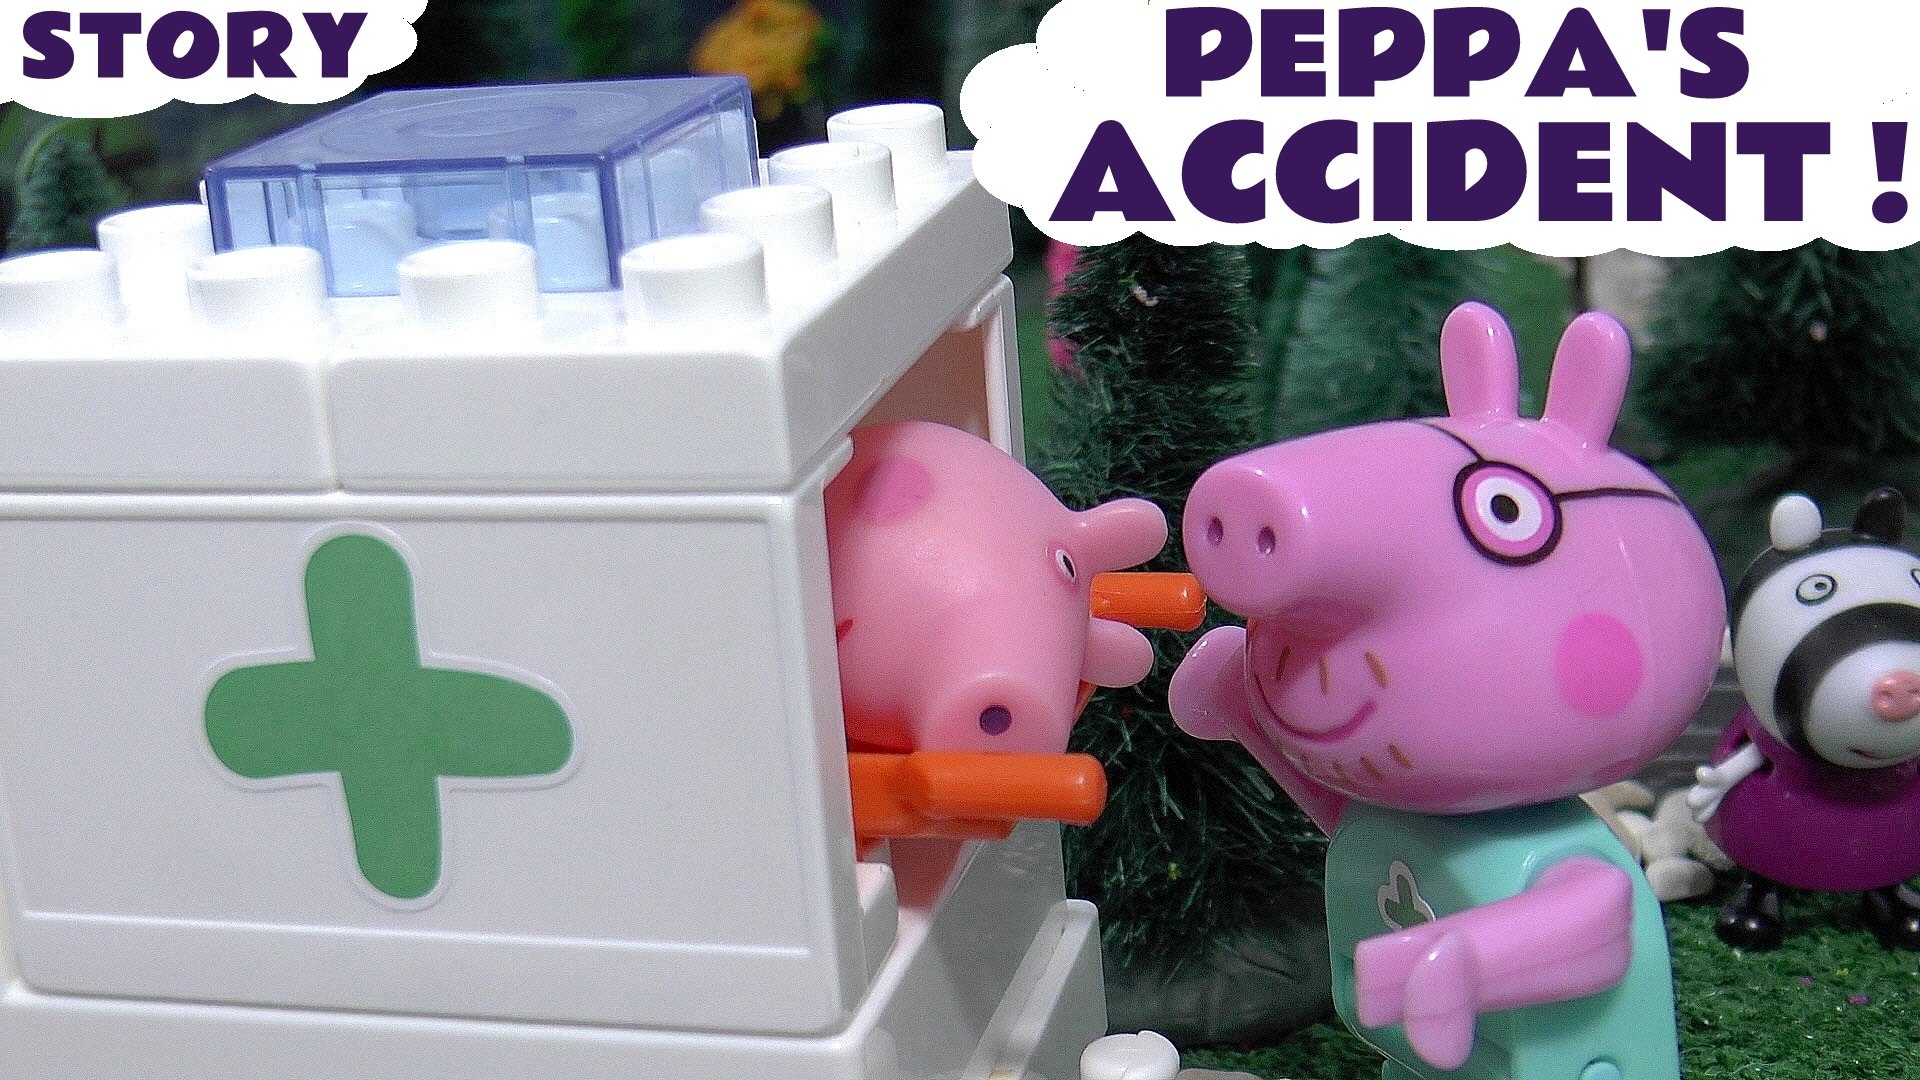 peppa pig ambulance toy